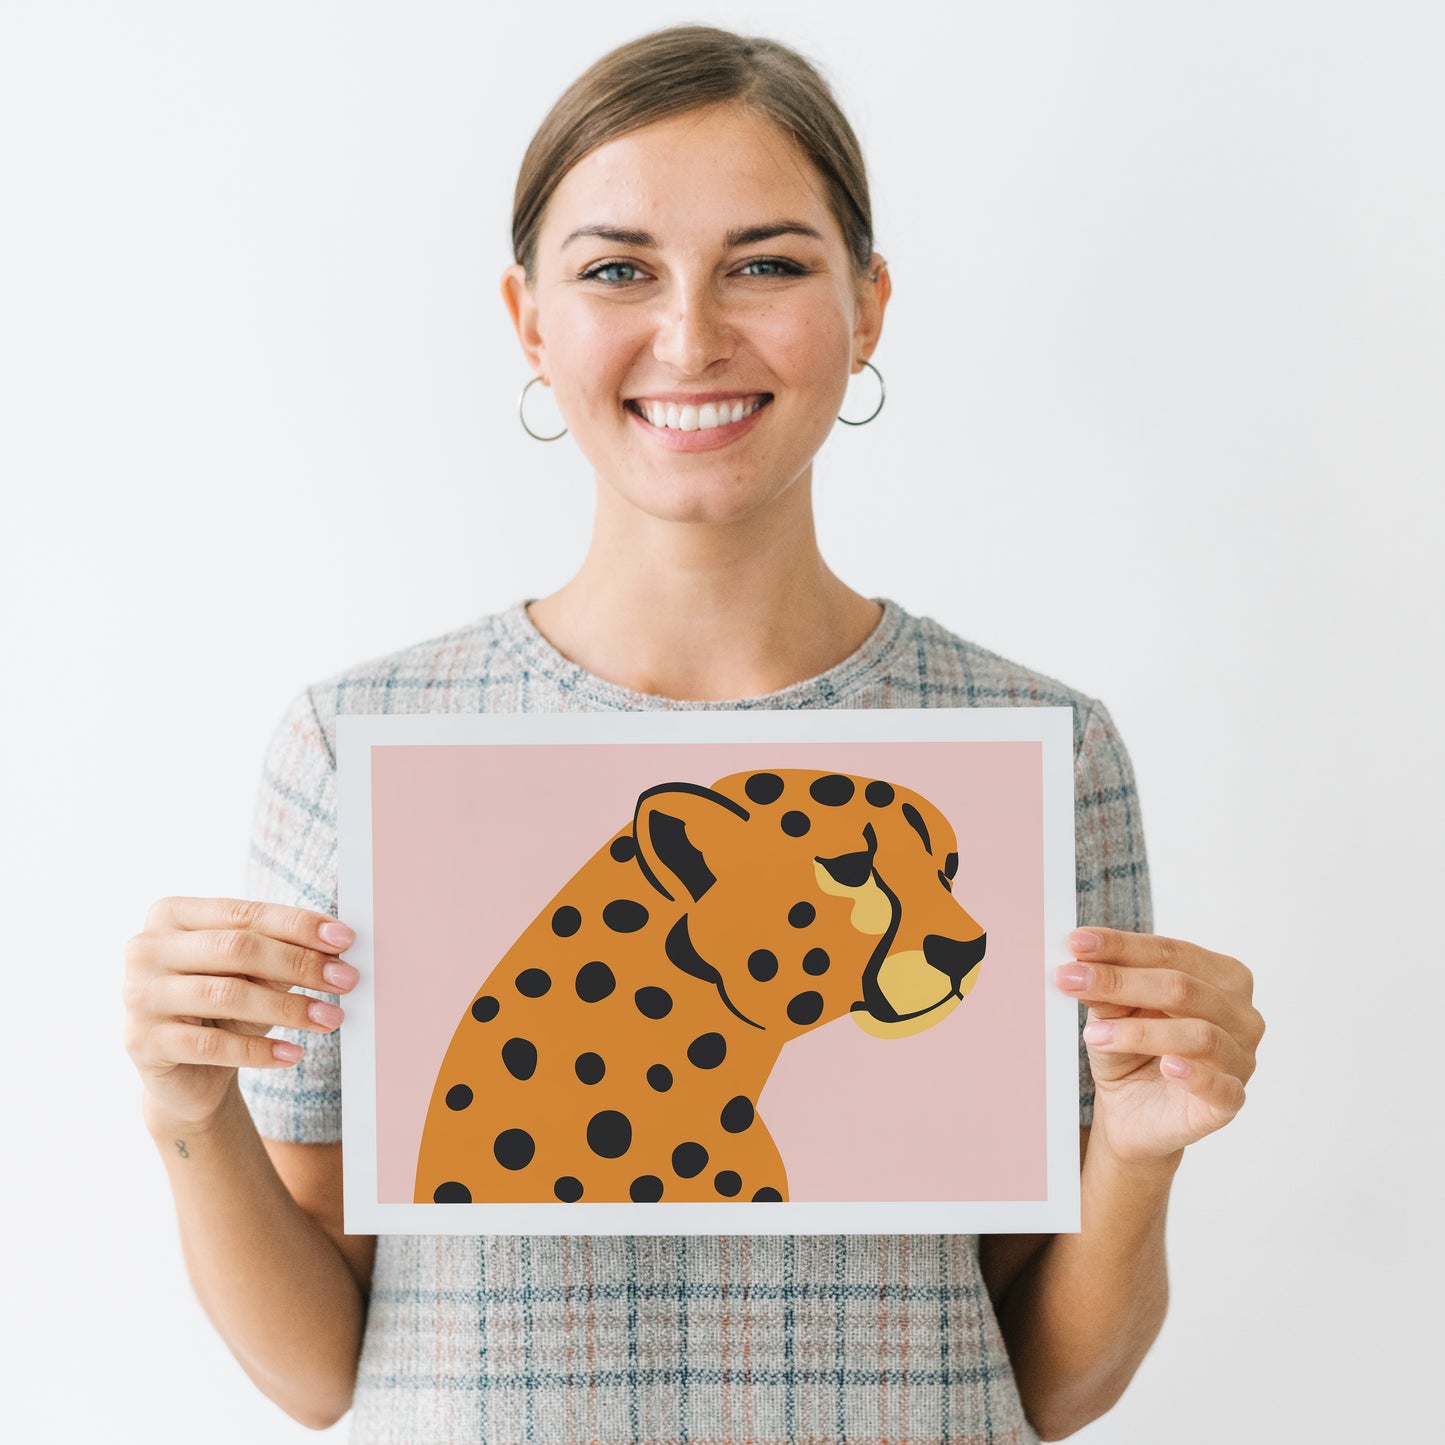 Cute Cheetah Poster